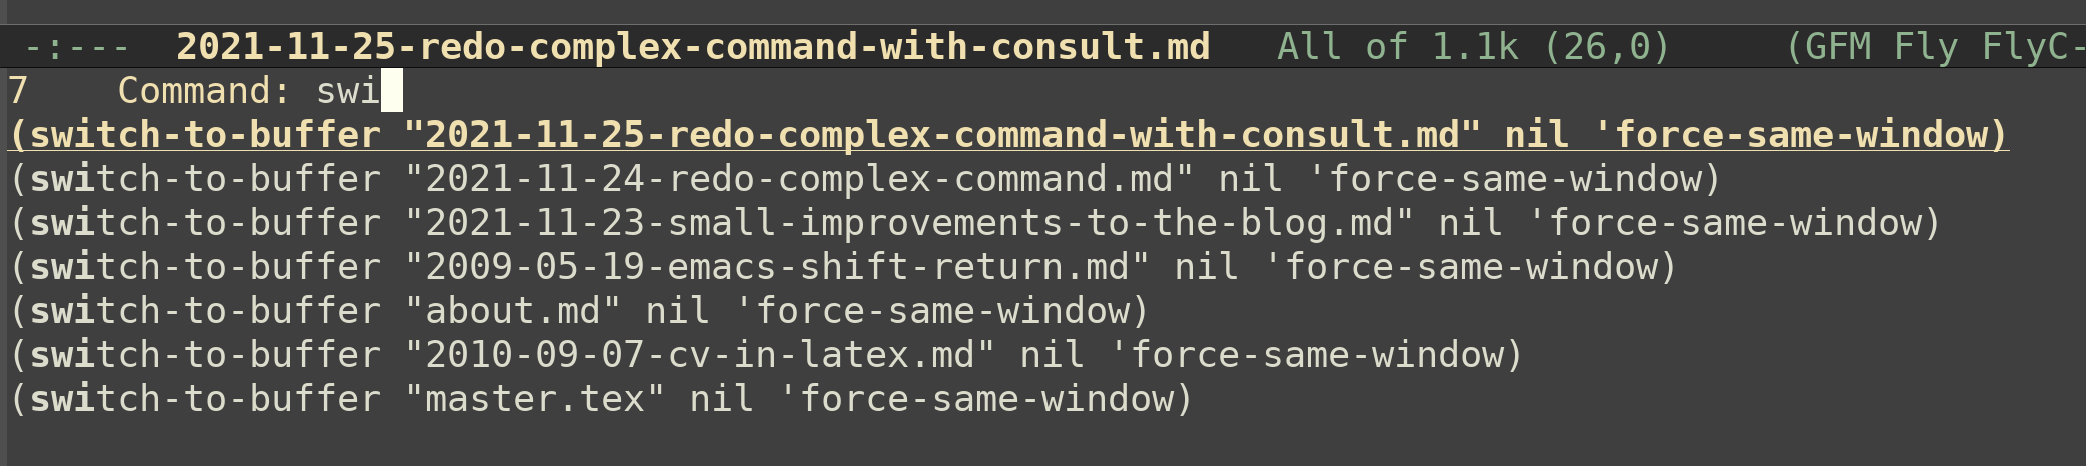 consult-complex-command.png